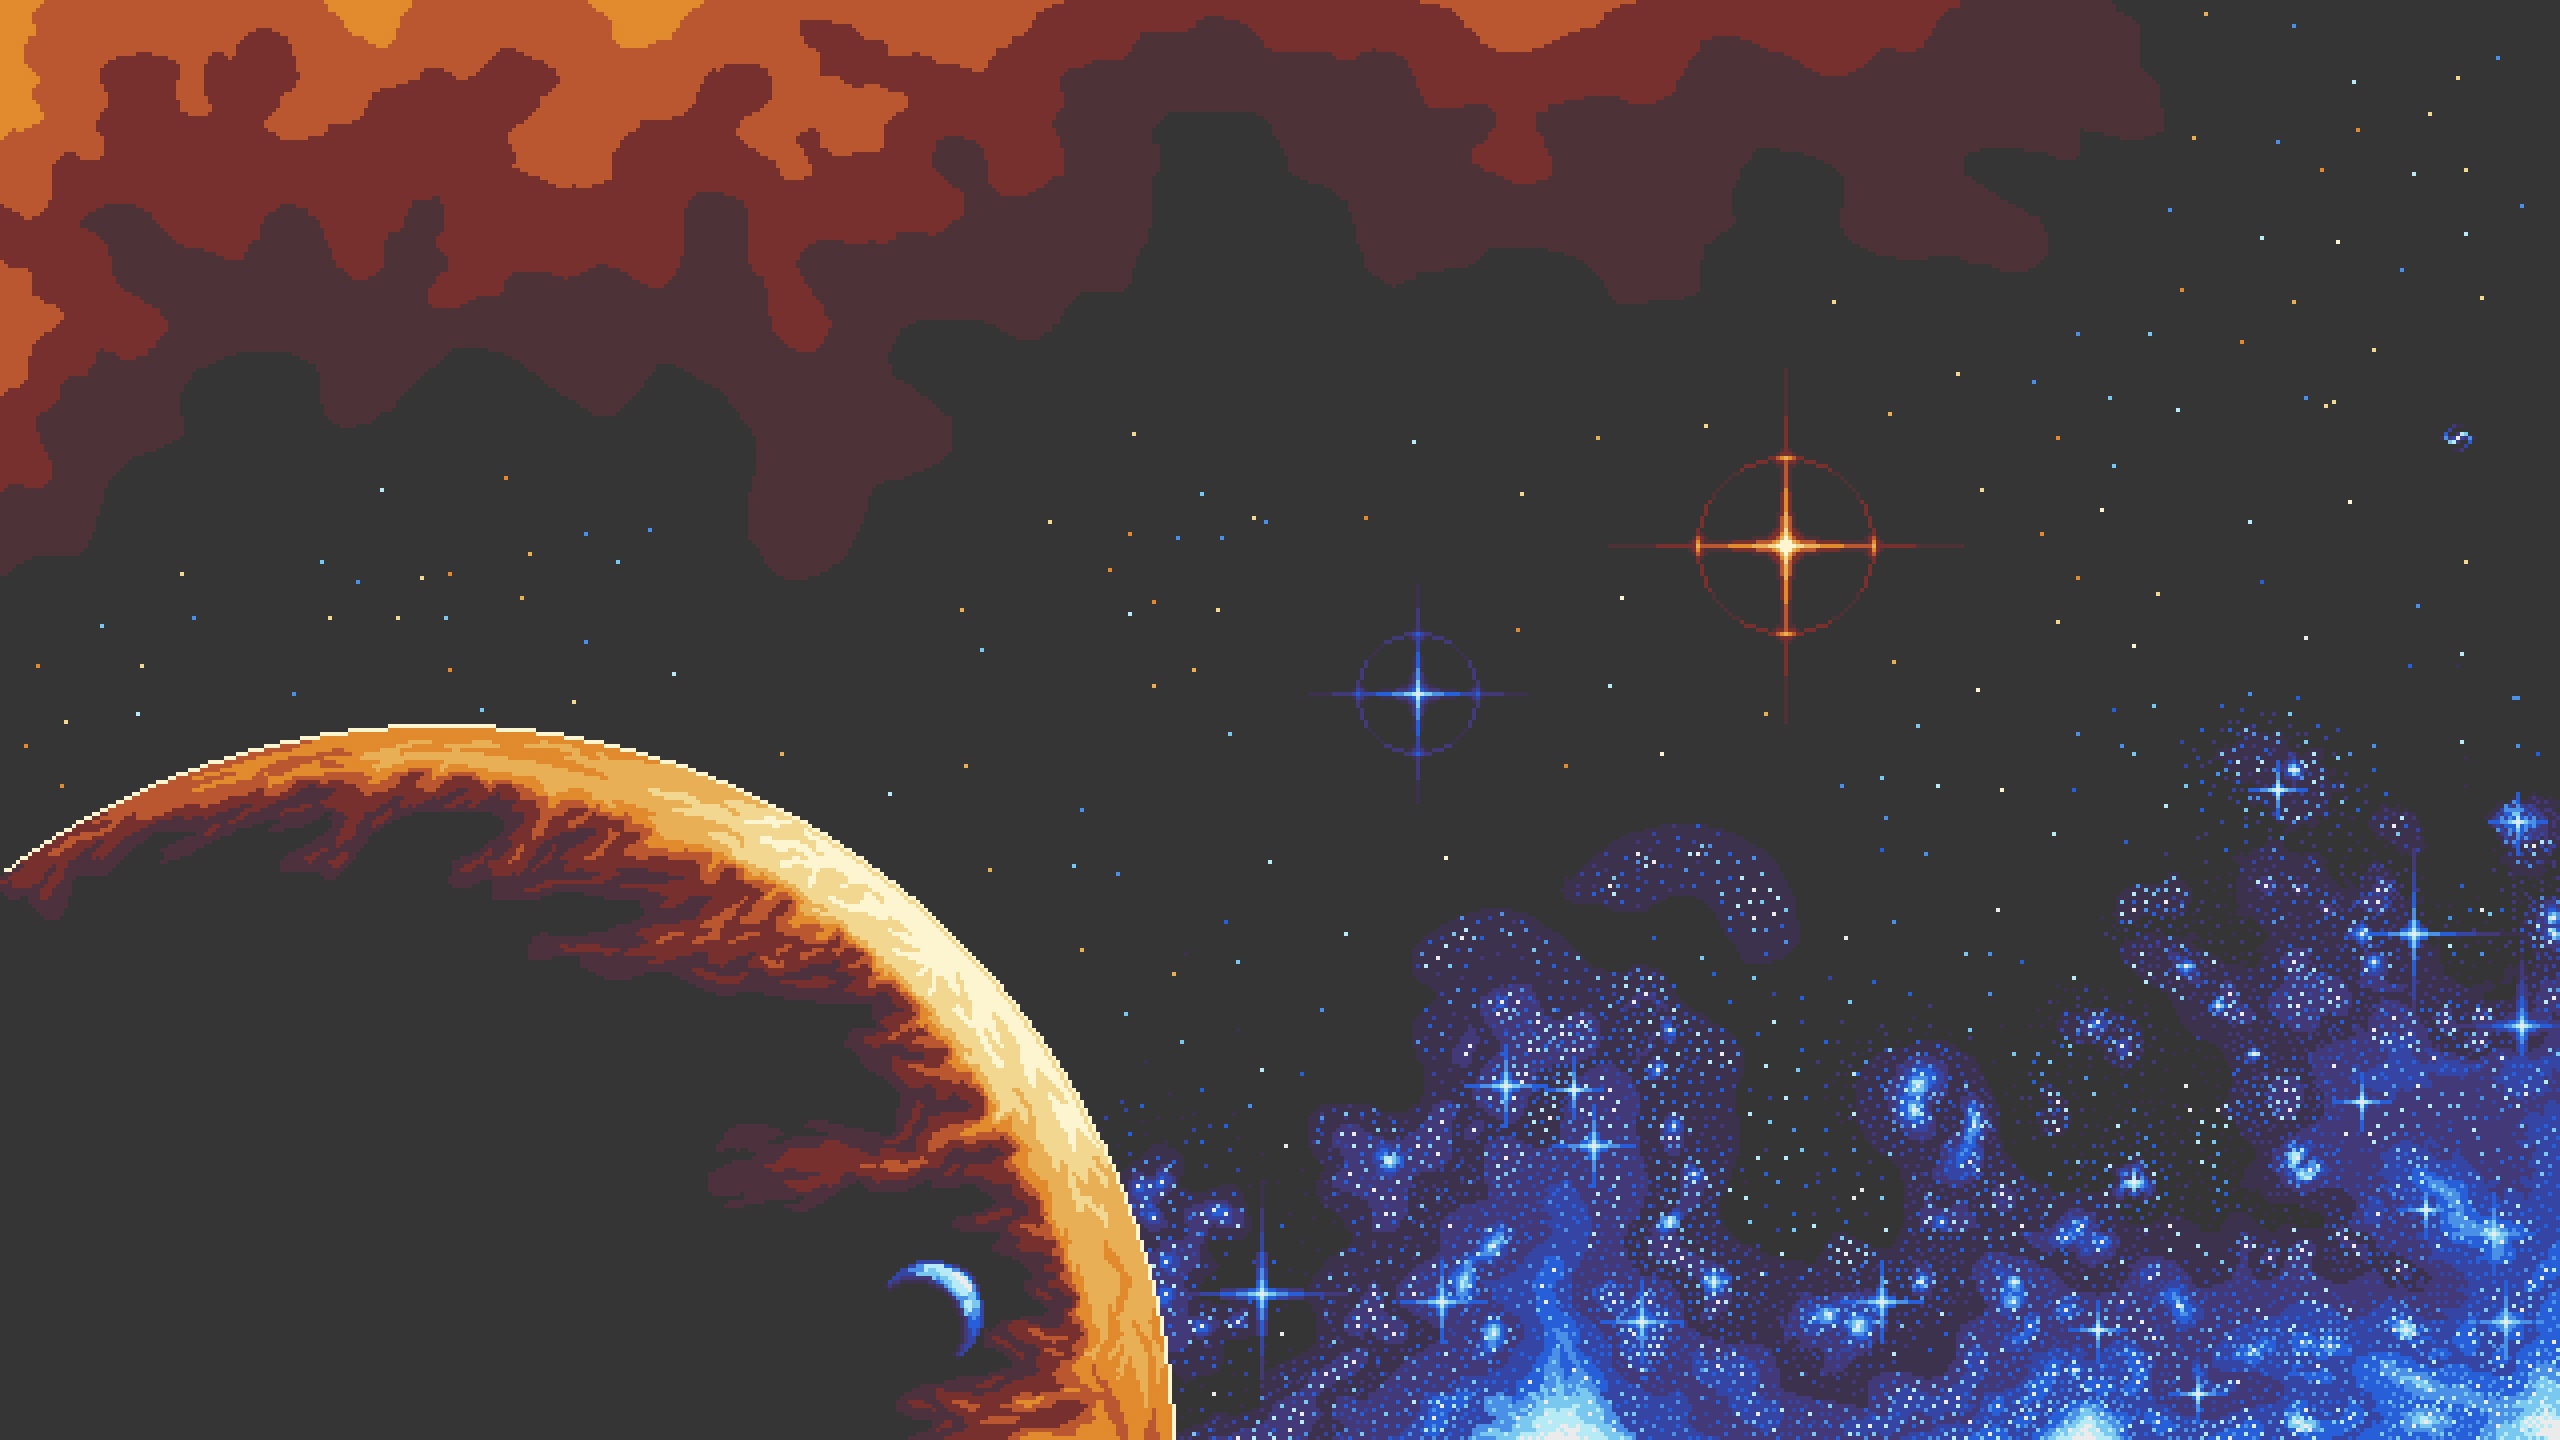 Pixel Art Stars Space Digital Art Planet Simple Background Minimalism 2560x1440